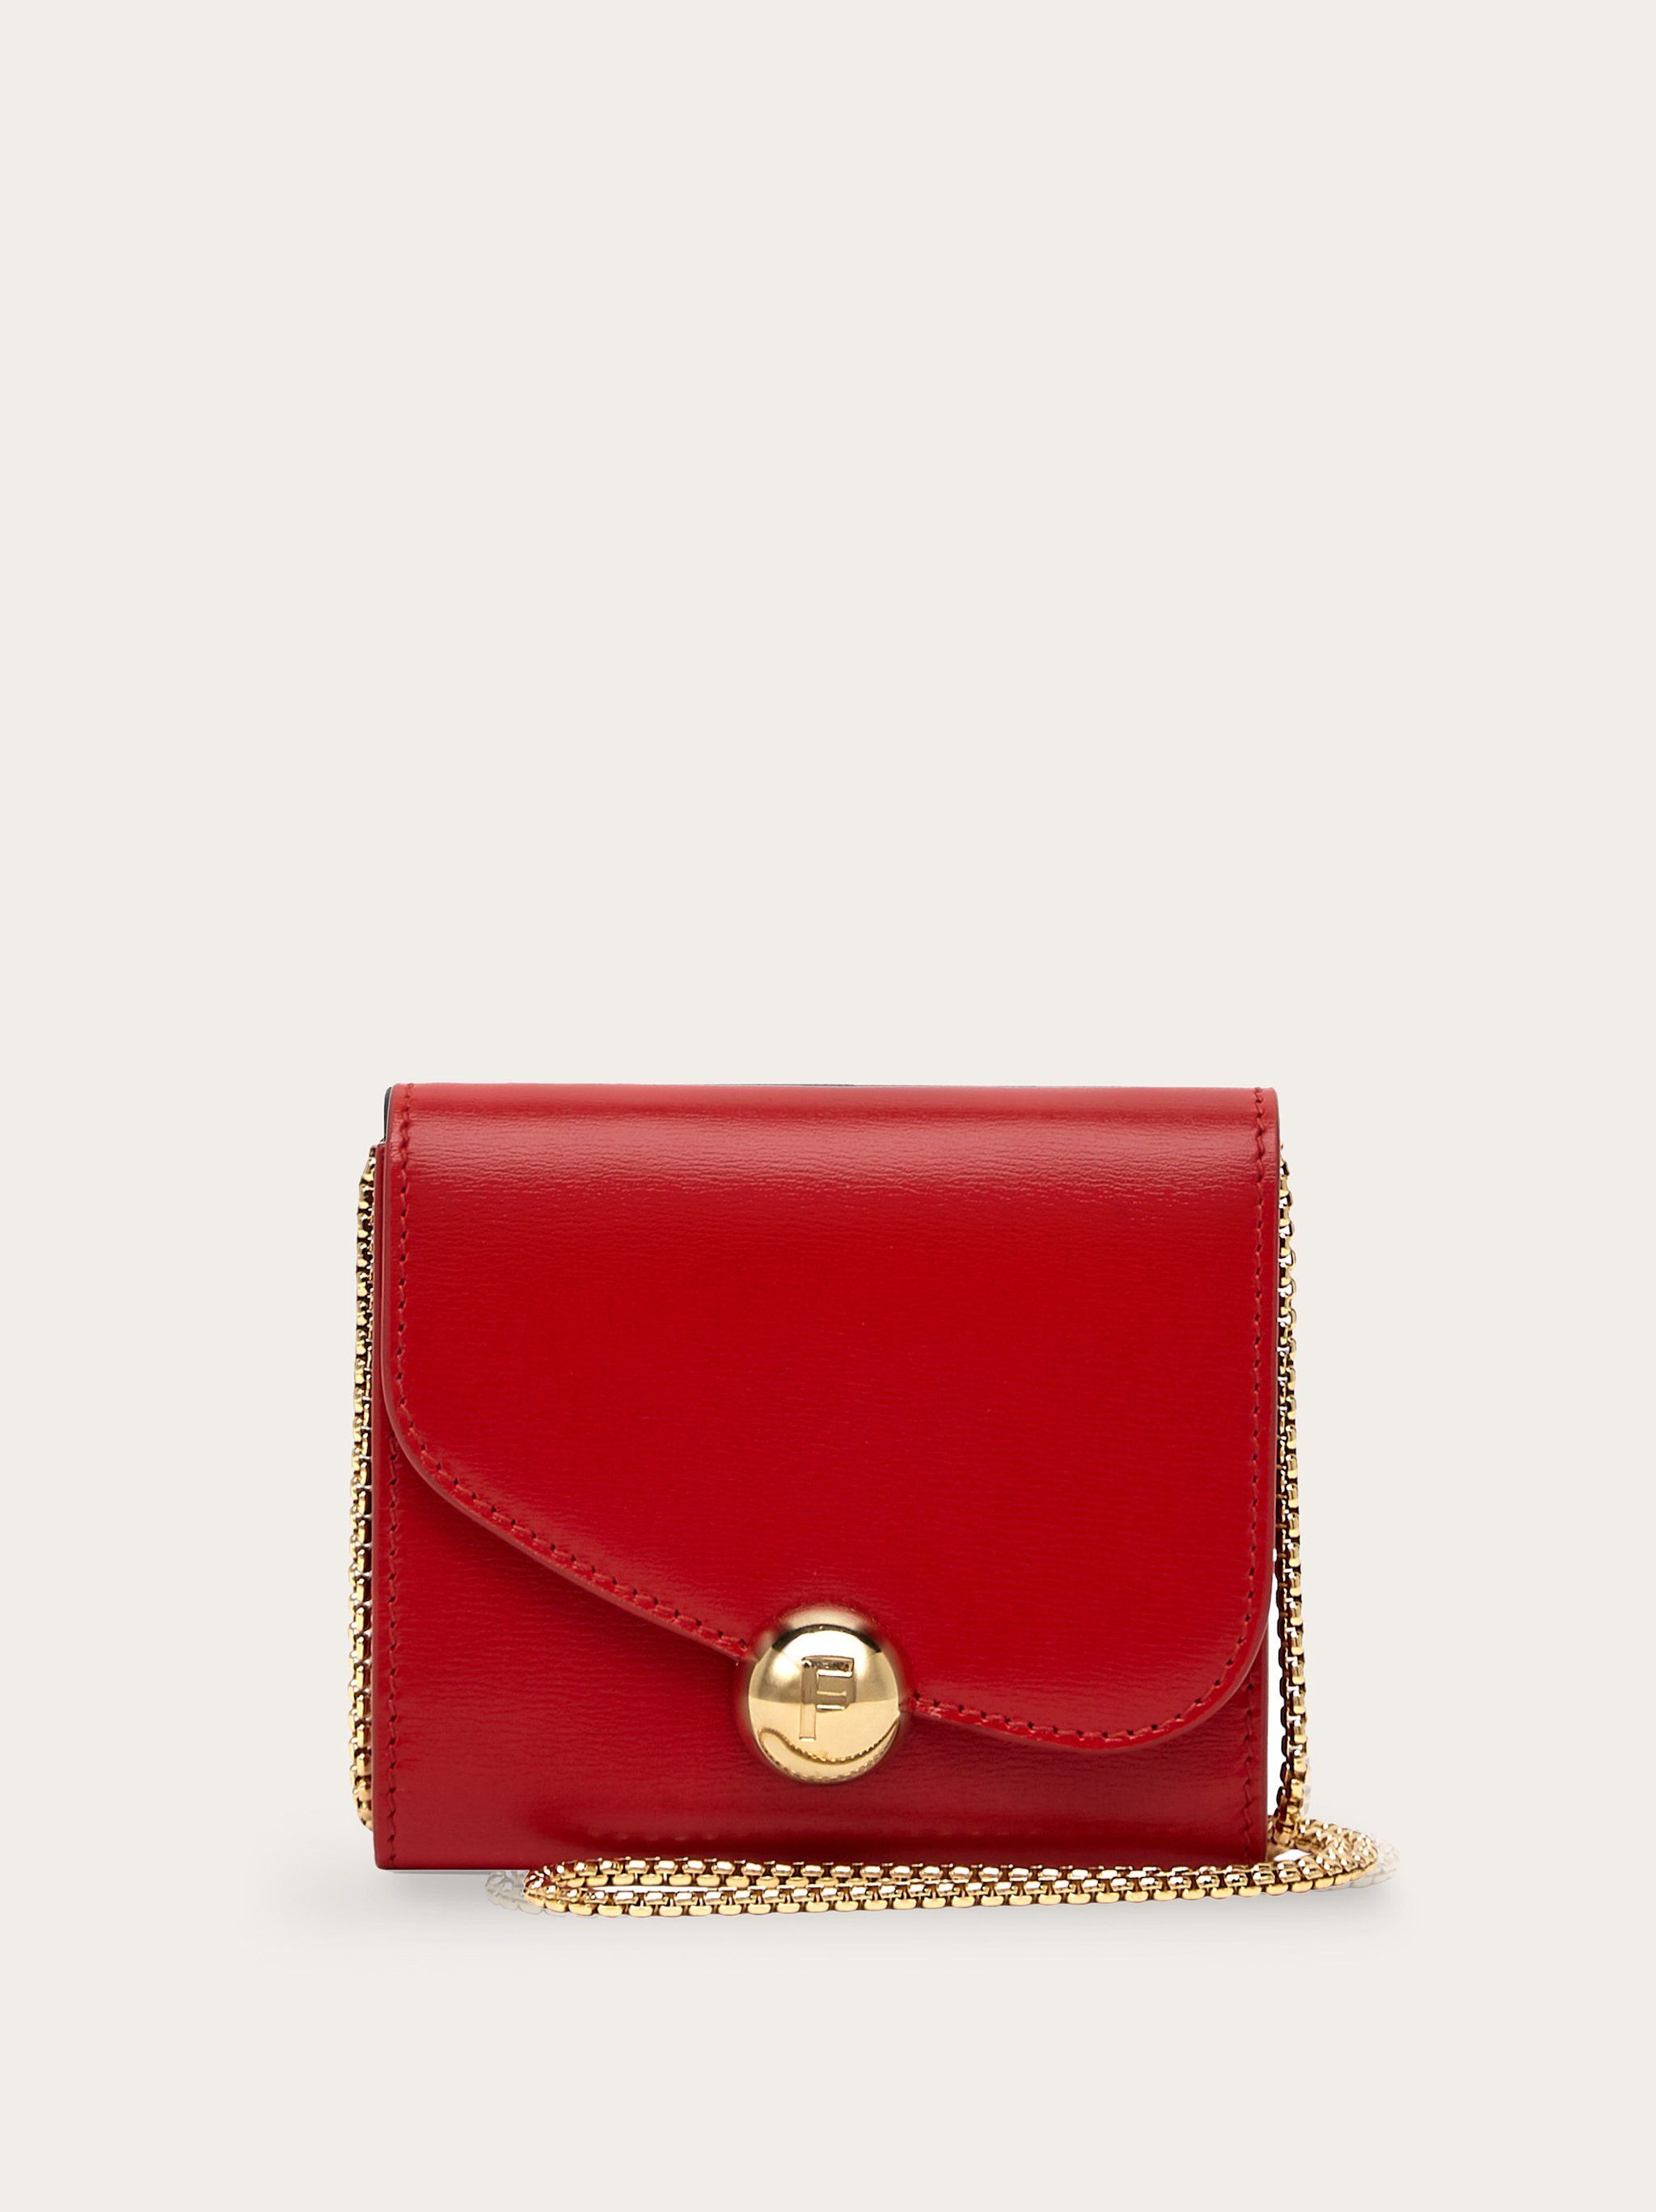 Asymmetrical flap compact wallet | red | Wallets & Coin Purses Women's | Ferragamo GB | Ferragamo (EU)